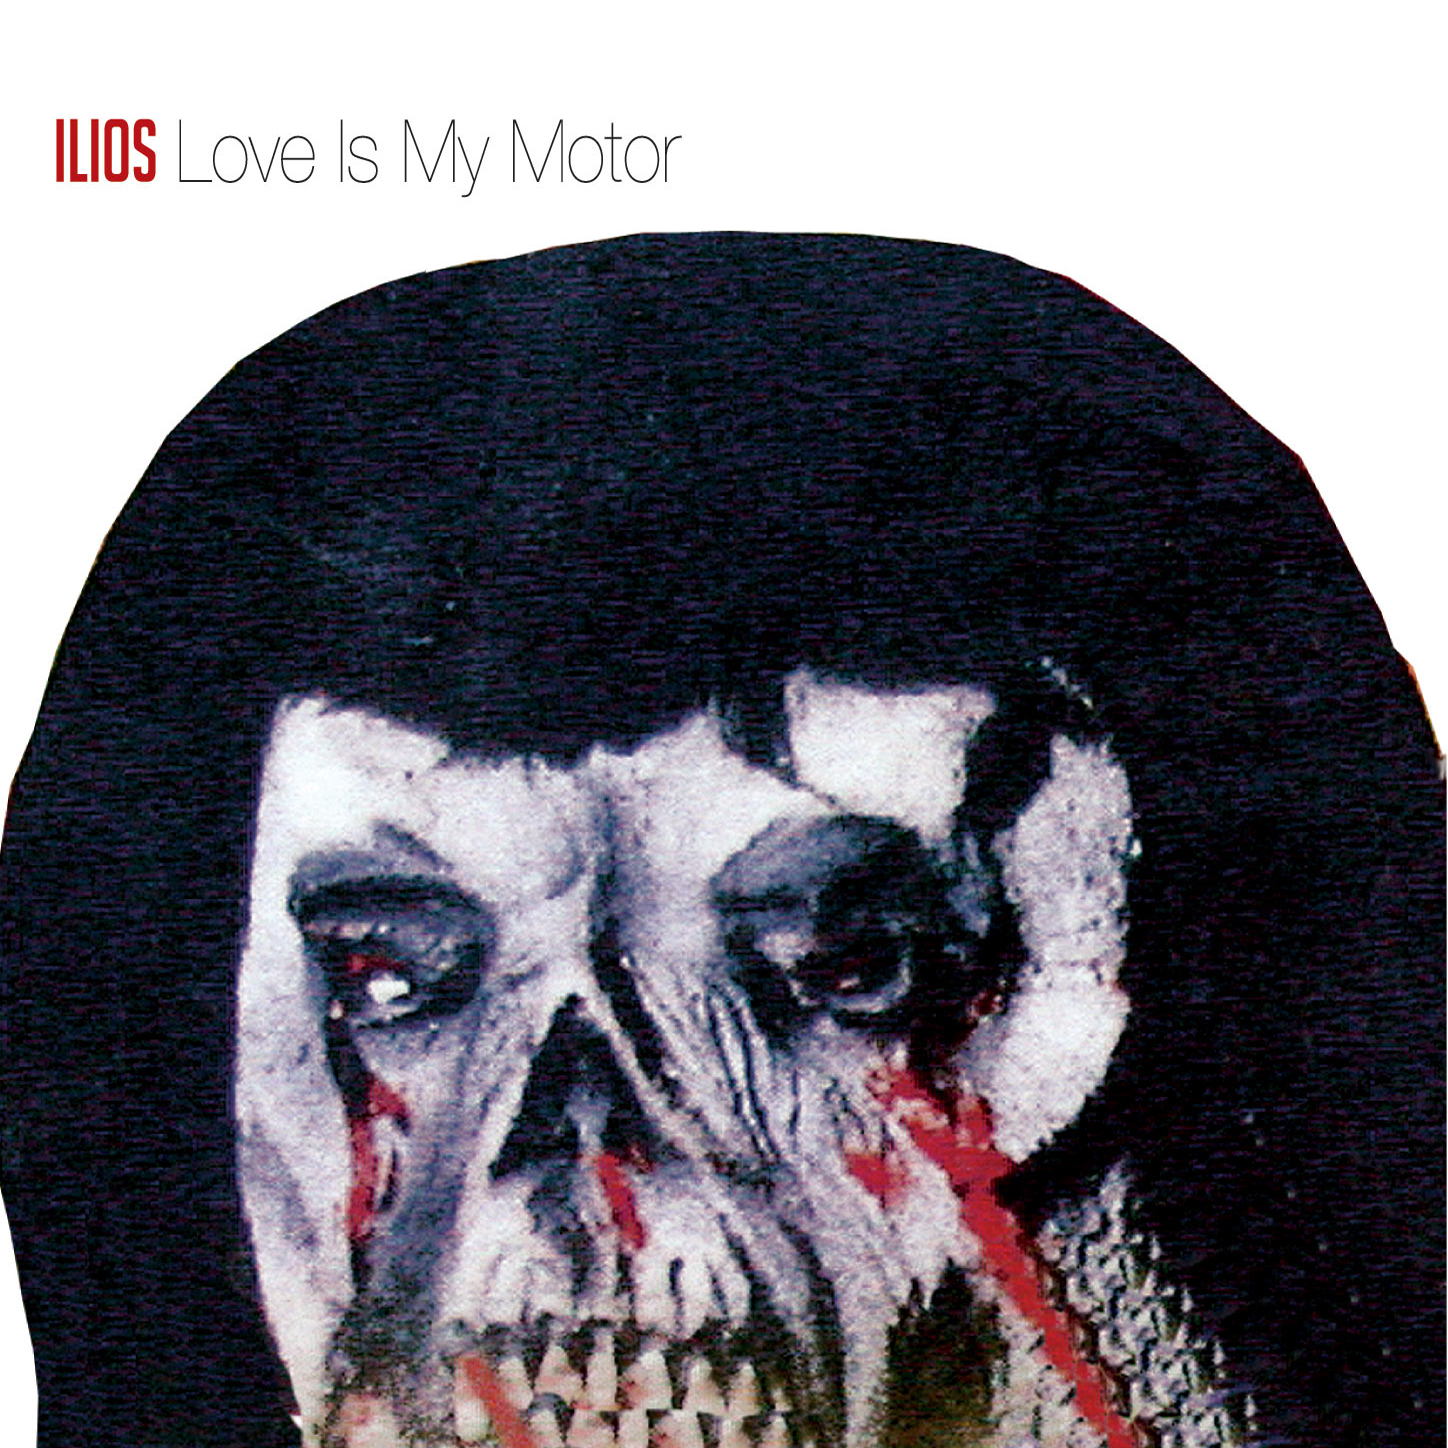 ILIOS – Love is my motor